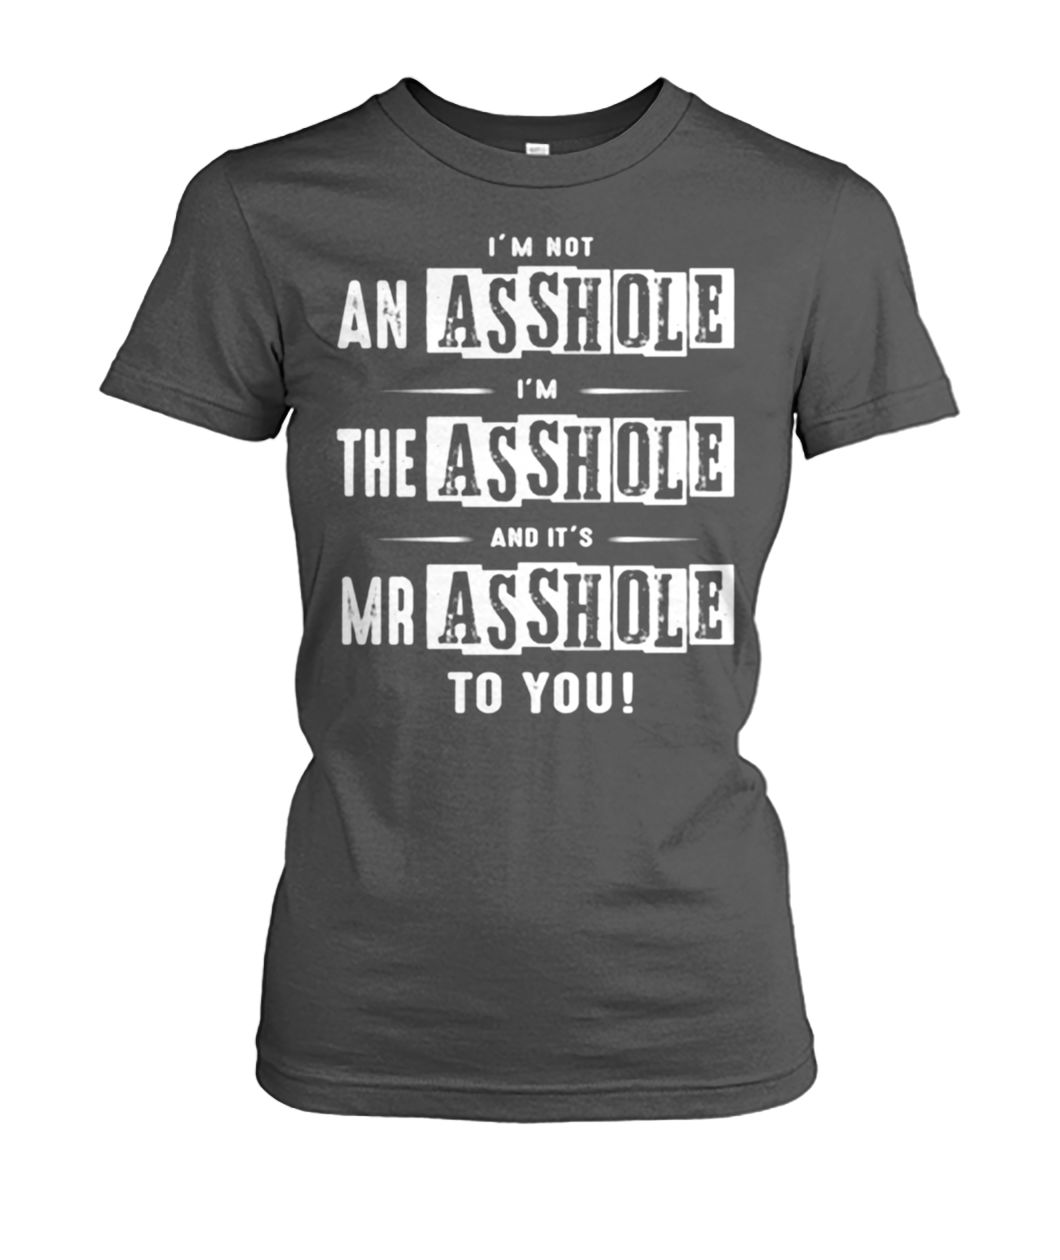 I’m not an asshole I’m the asshole and it’s mr asshole to you women's crew tee